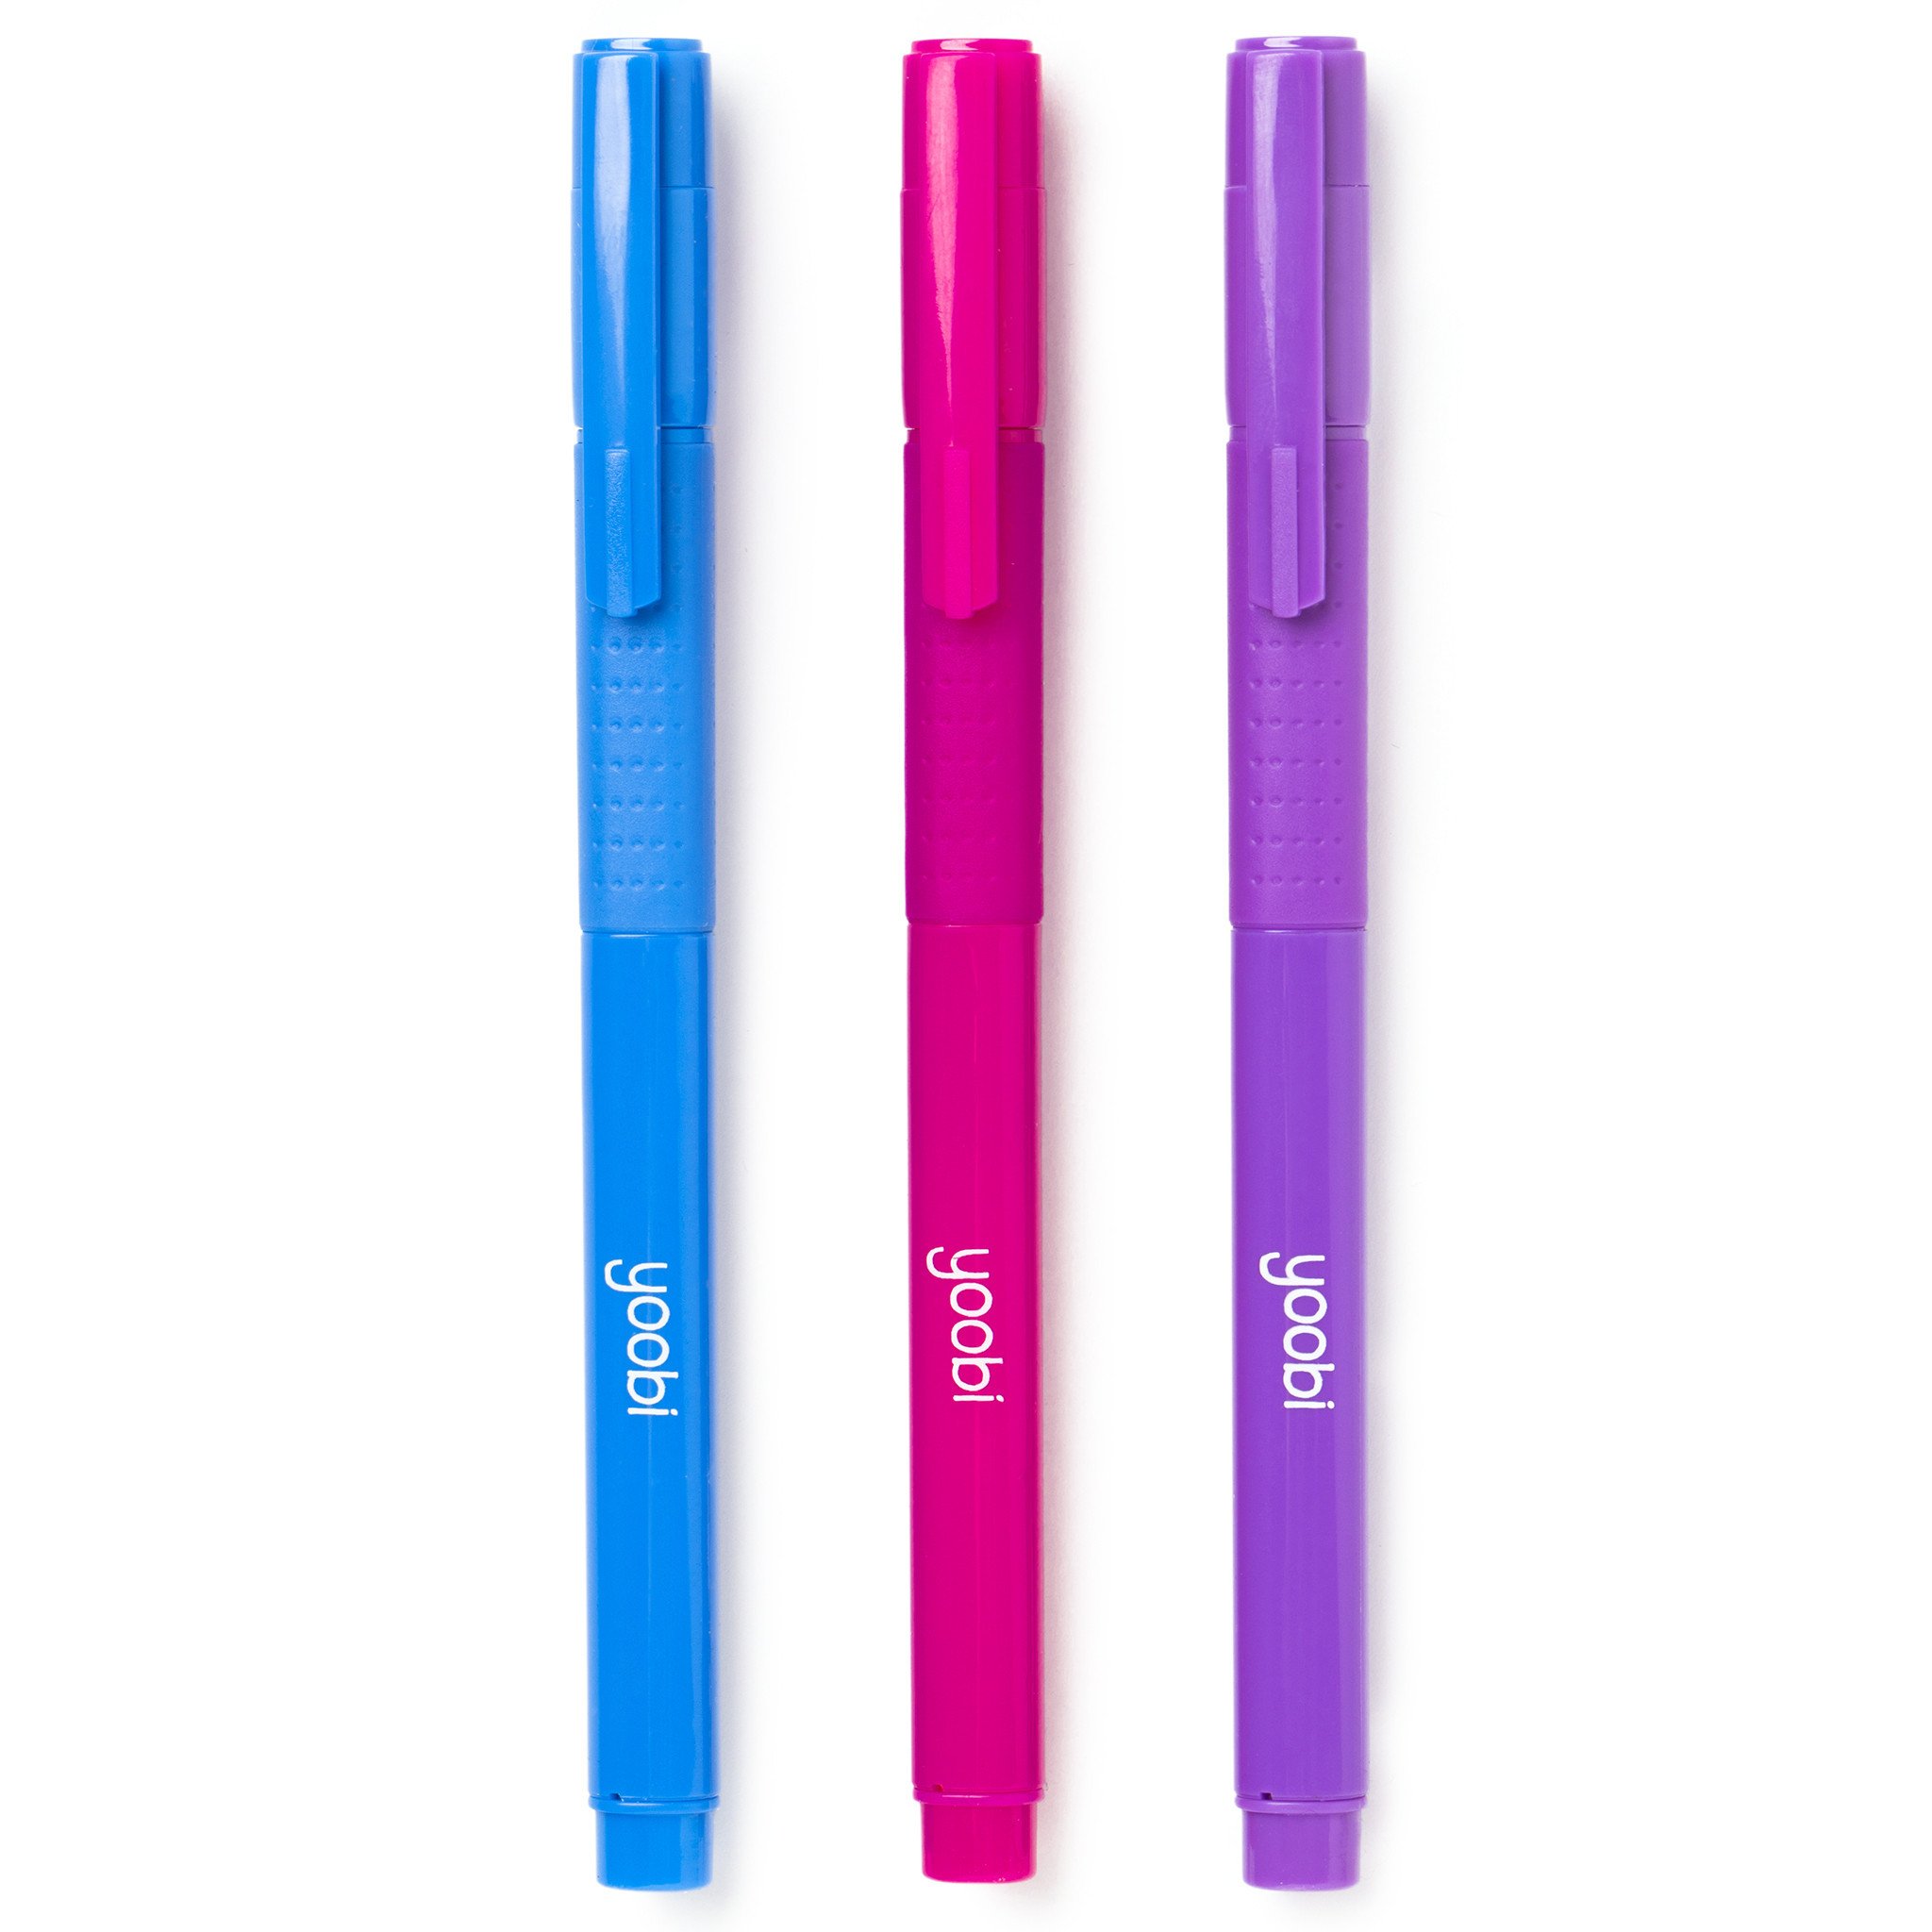 Assorted Color Gel Pens, 3 Pack - Colored Ink - Yoobi